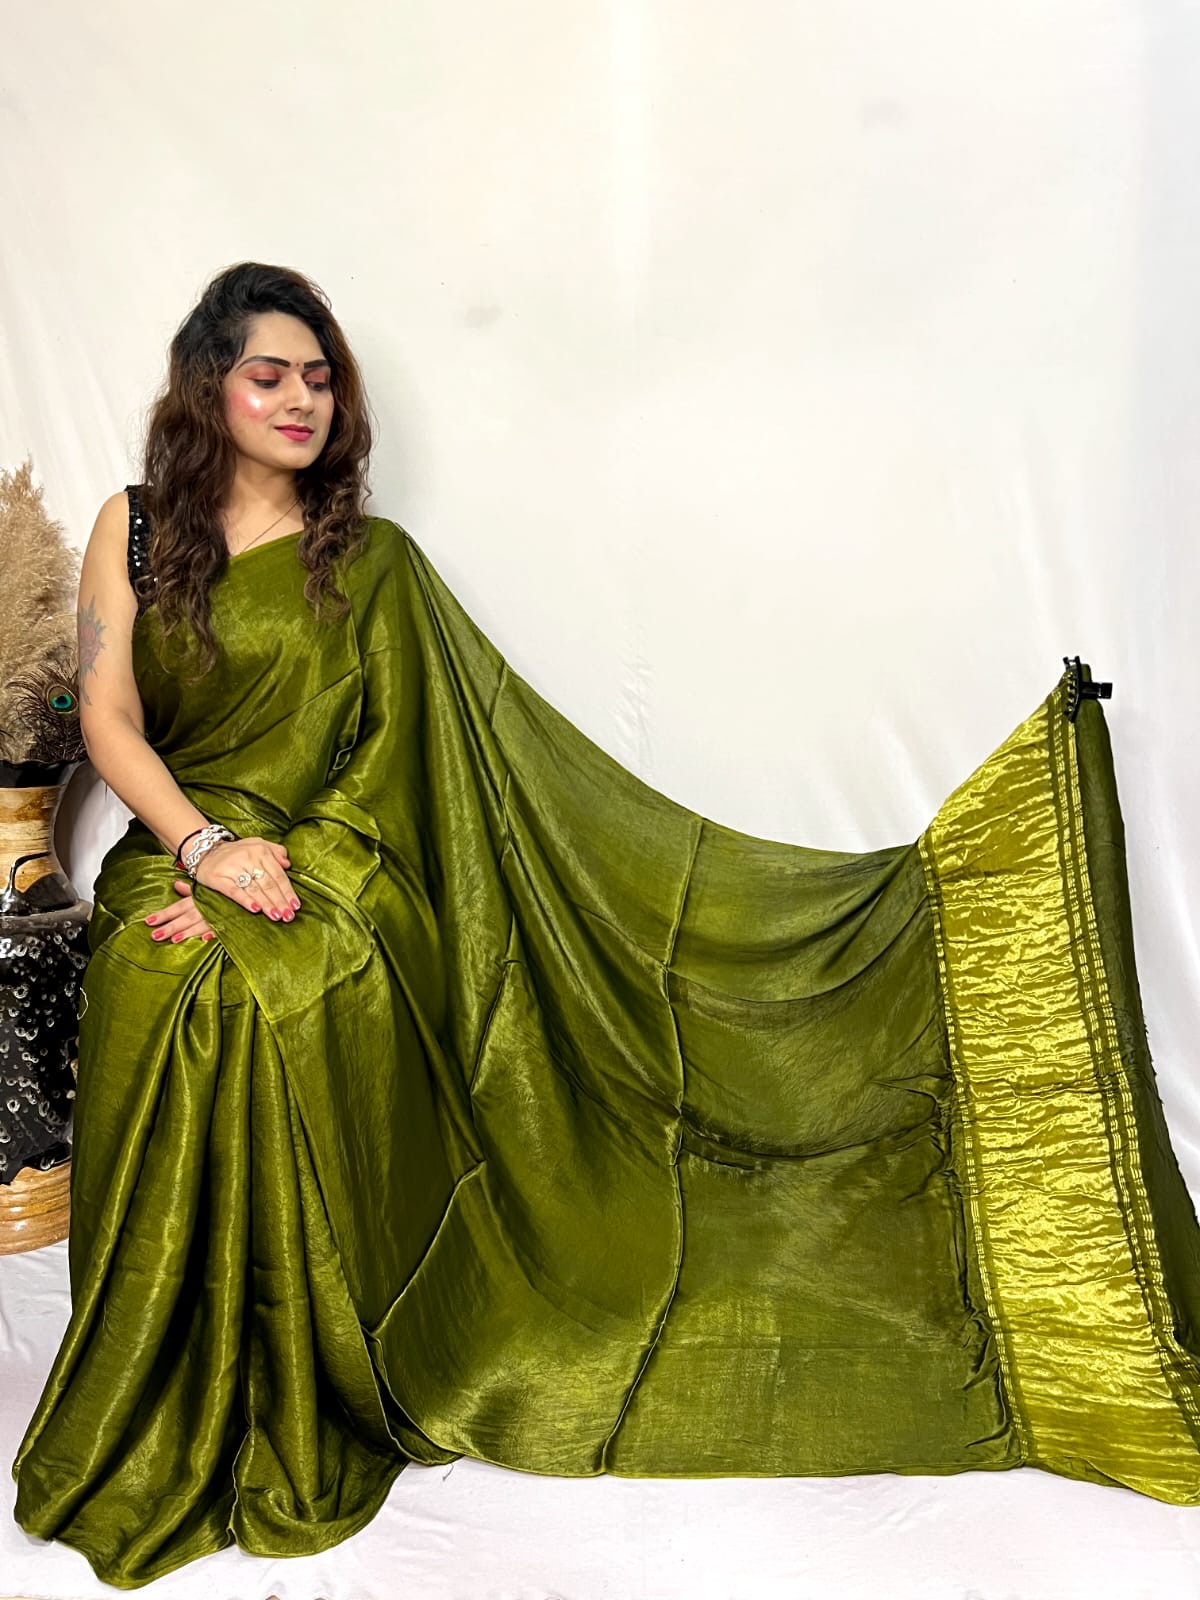 Modal Silk Lagdi Zari Pallu Saree - Premium  from Ethenika.com  - Just INR 4990! Shop now at Ethenika.com 